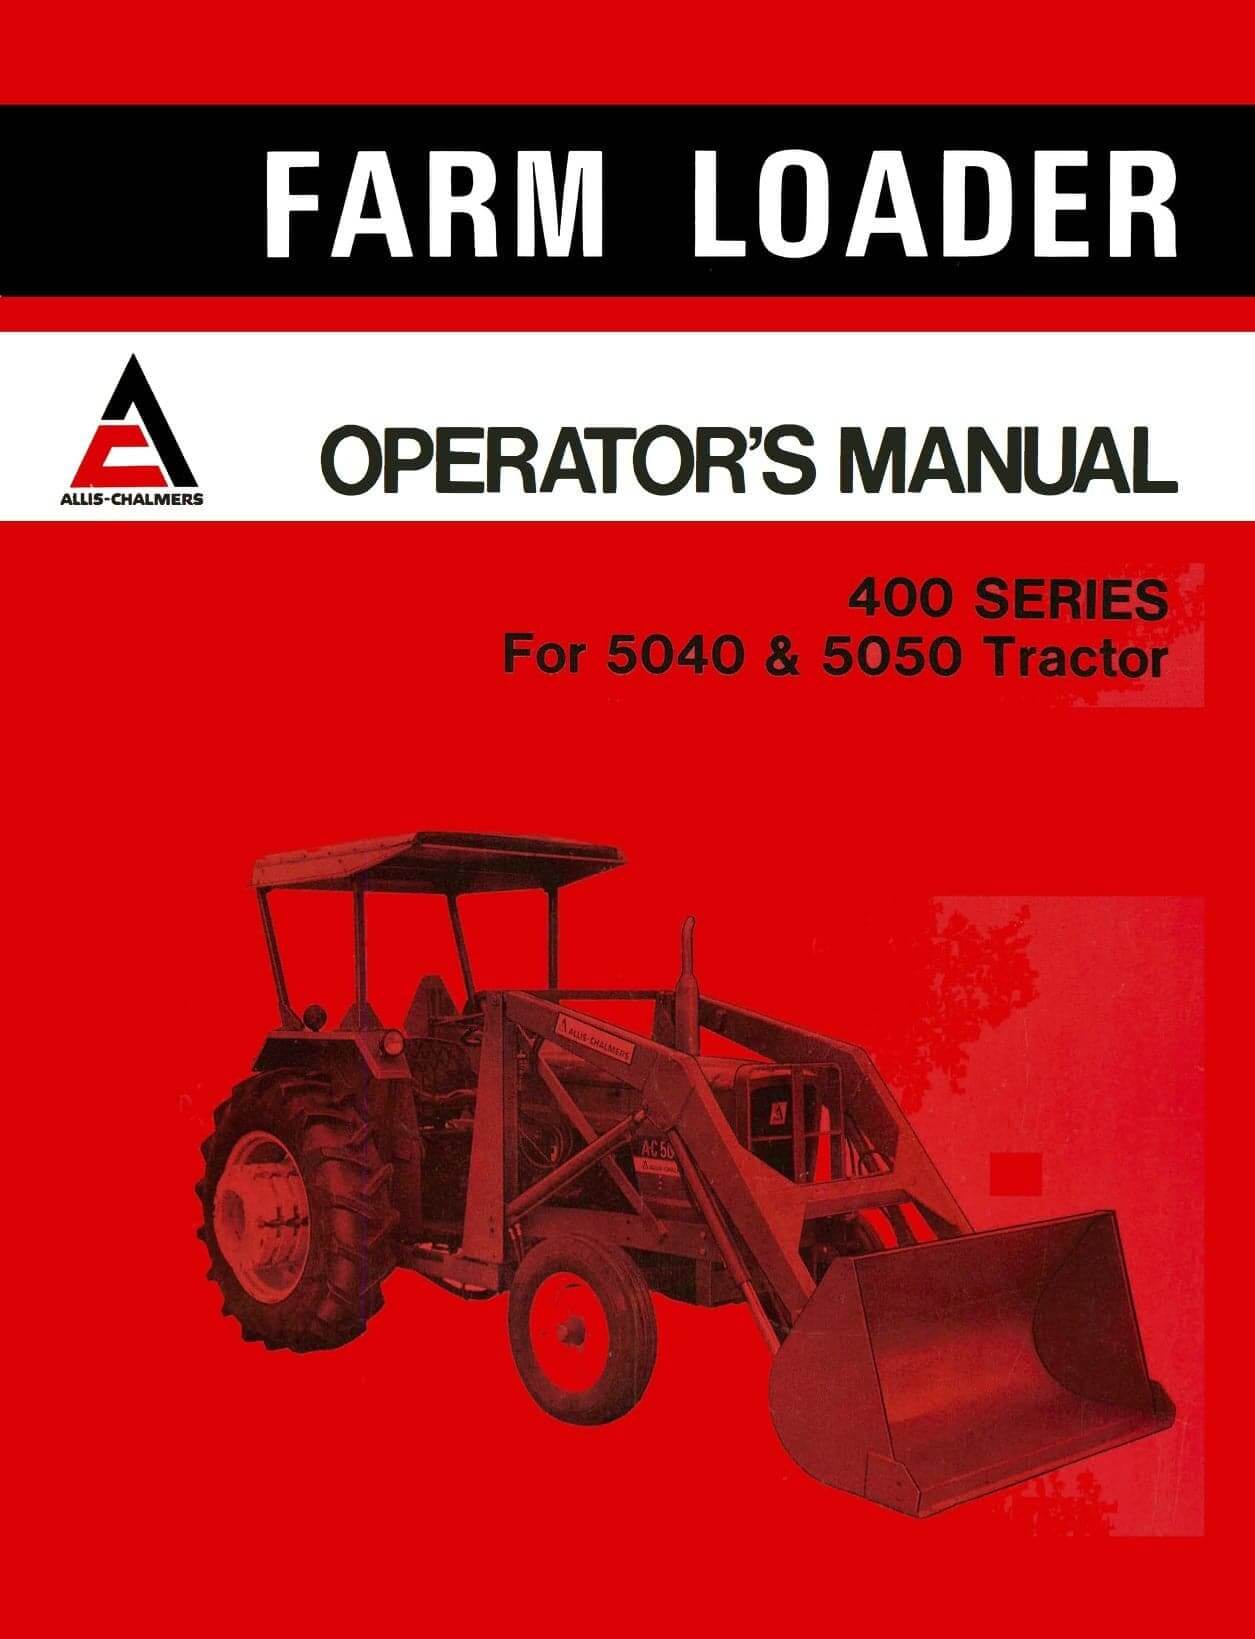 Allis-Chalmers 400 Series Farm Loader - Operator's Manual - Ag Manuals - A Provider of Digital Farm Manuals - 1